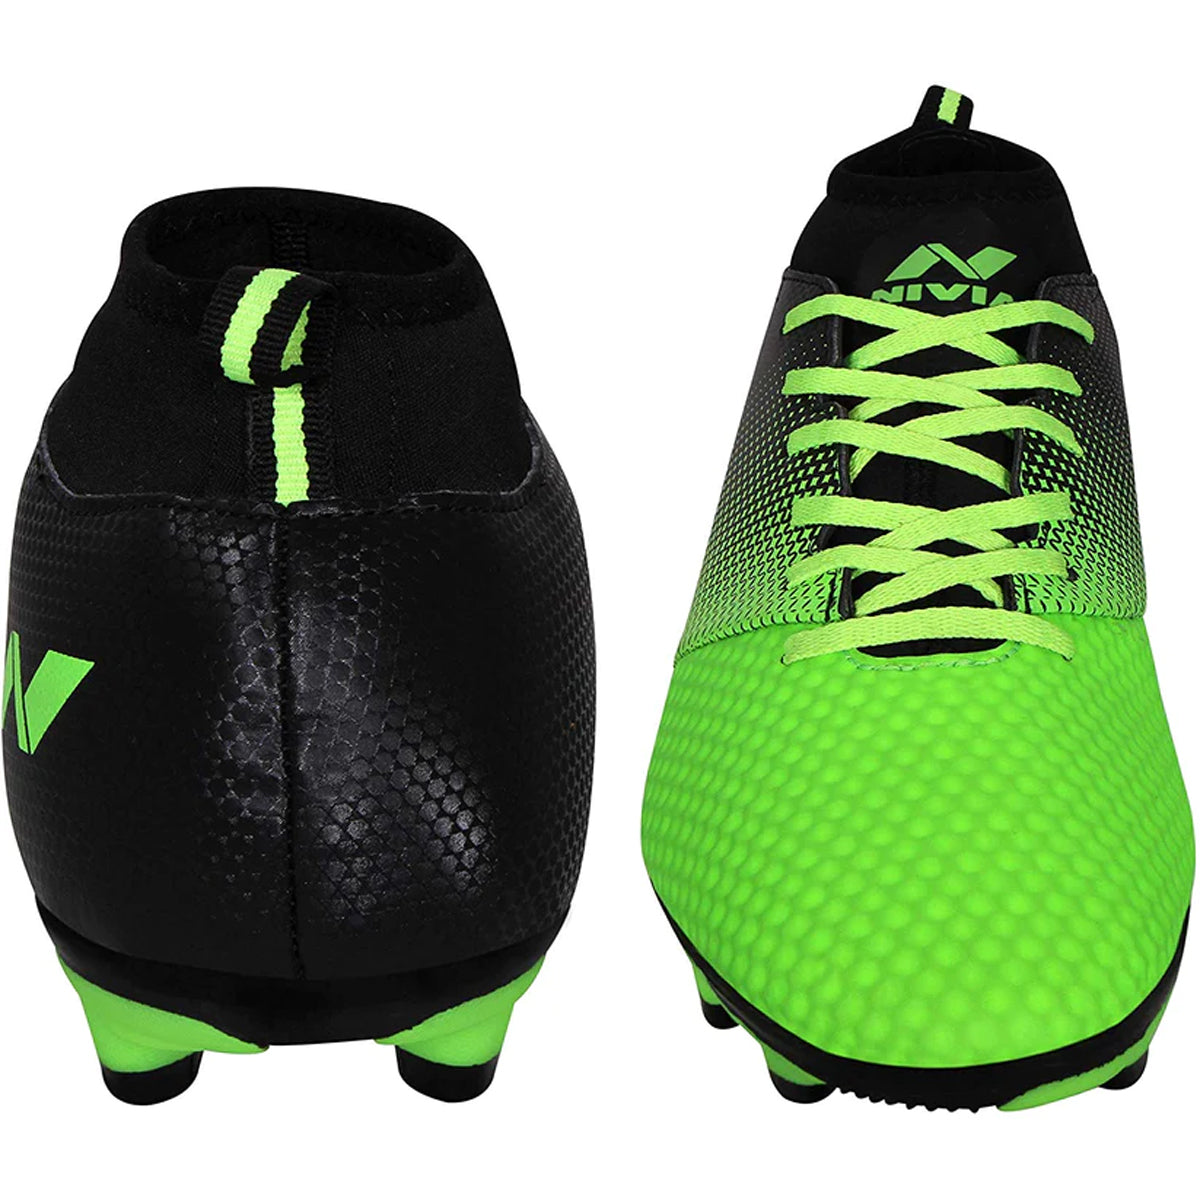 Nivia Ashtang Football Stud Shoes - Green - Best Price online Prokicksports.com